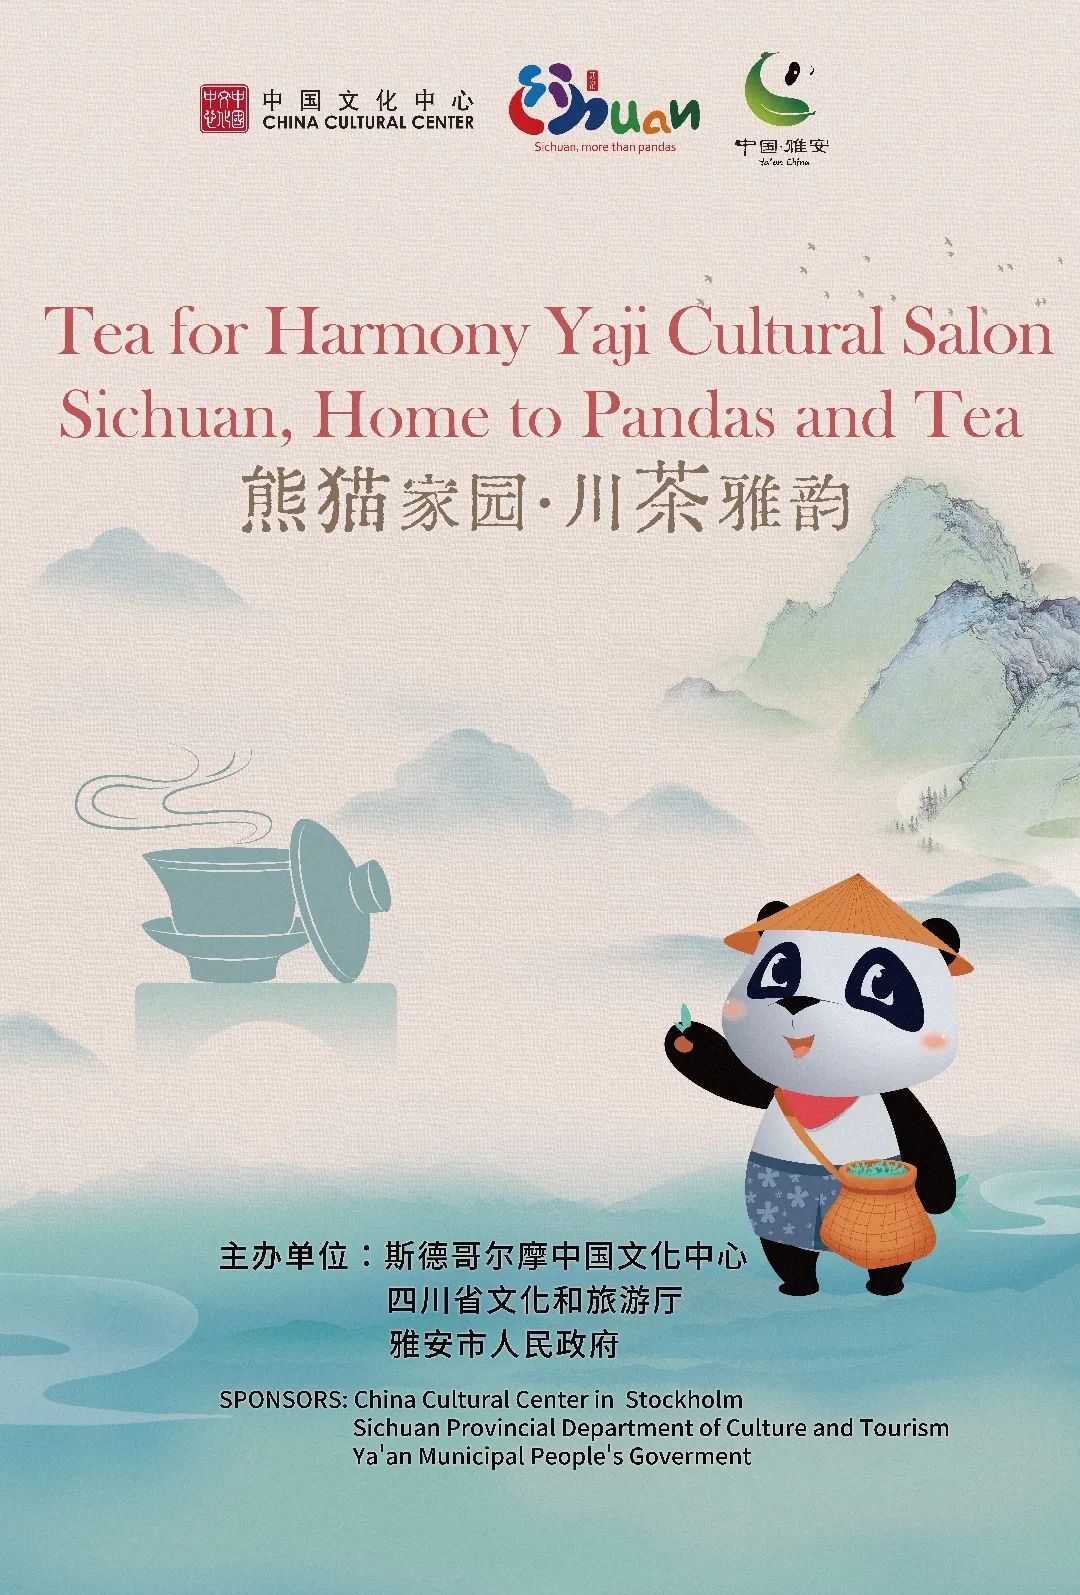 Ambassador Cui Aimin’s Remarks at the Tea for Harmony Yaji Cultural Salon